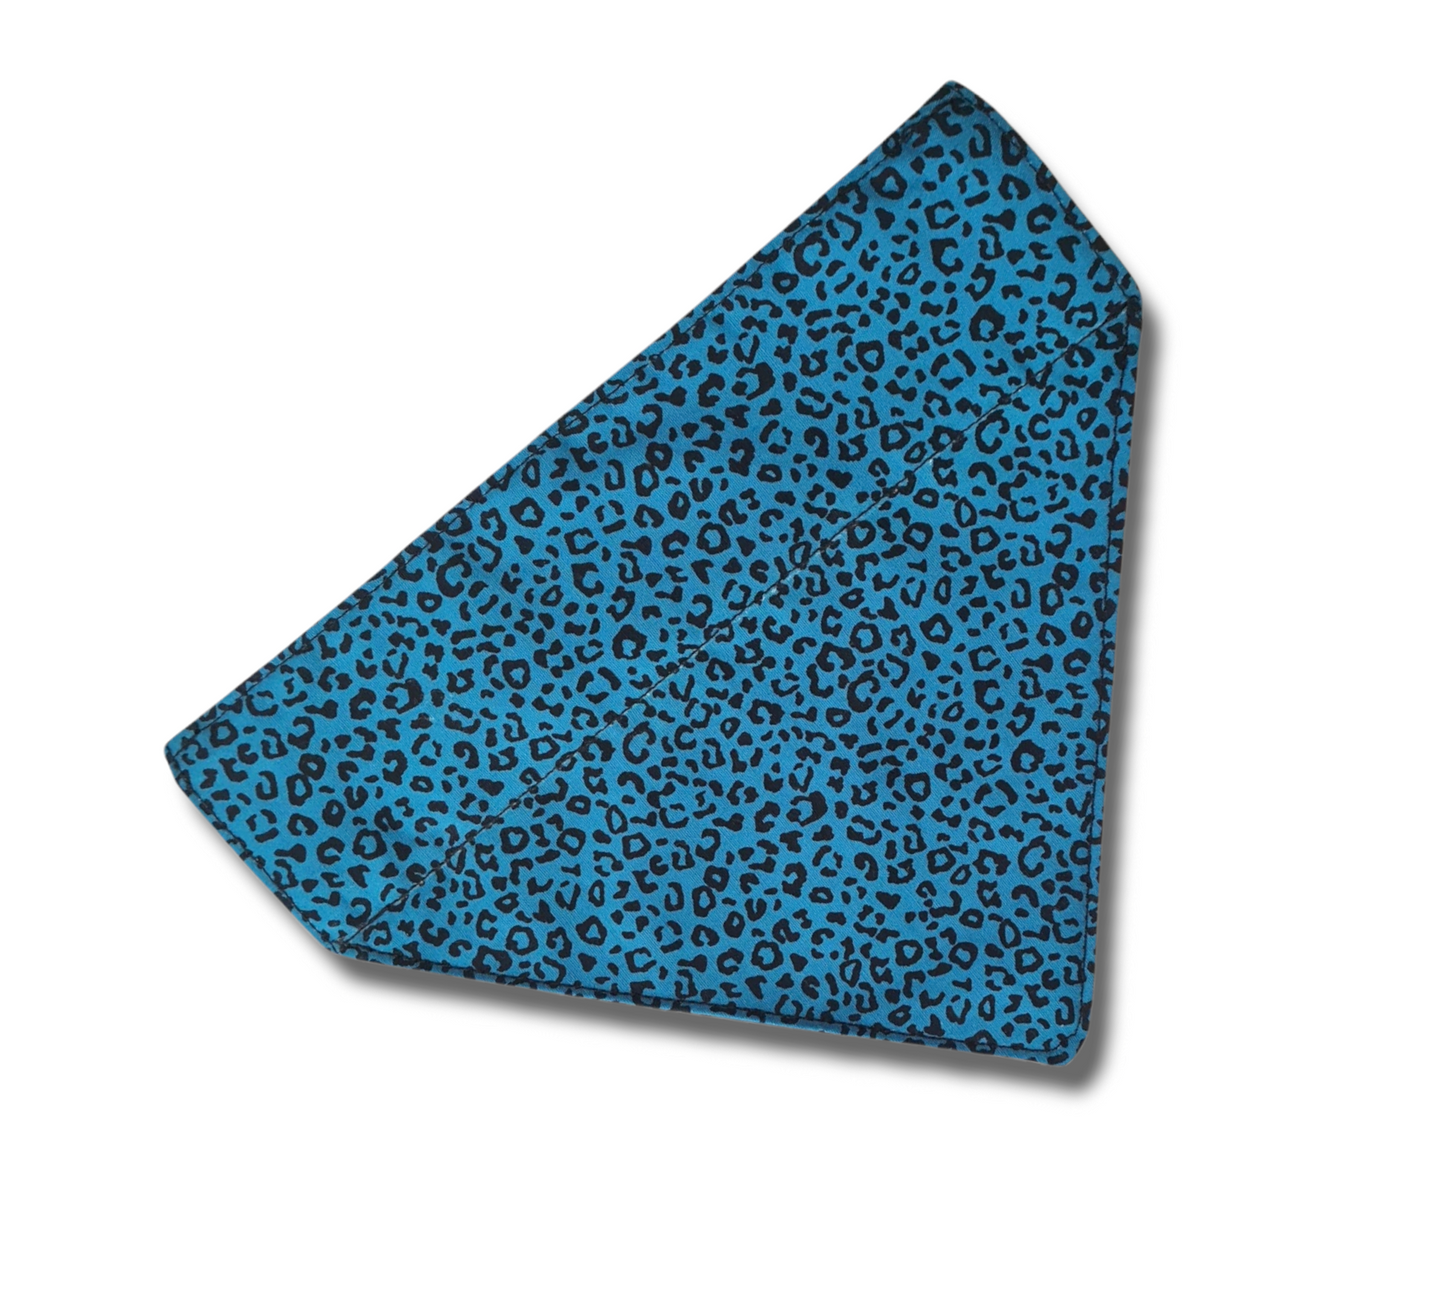 Blue Leopard print dog bandana